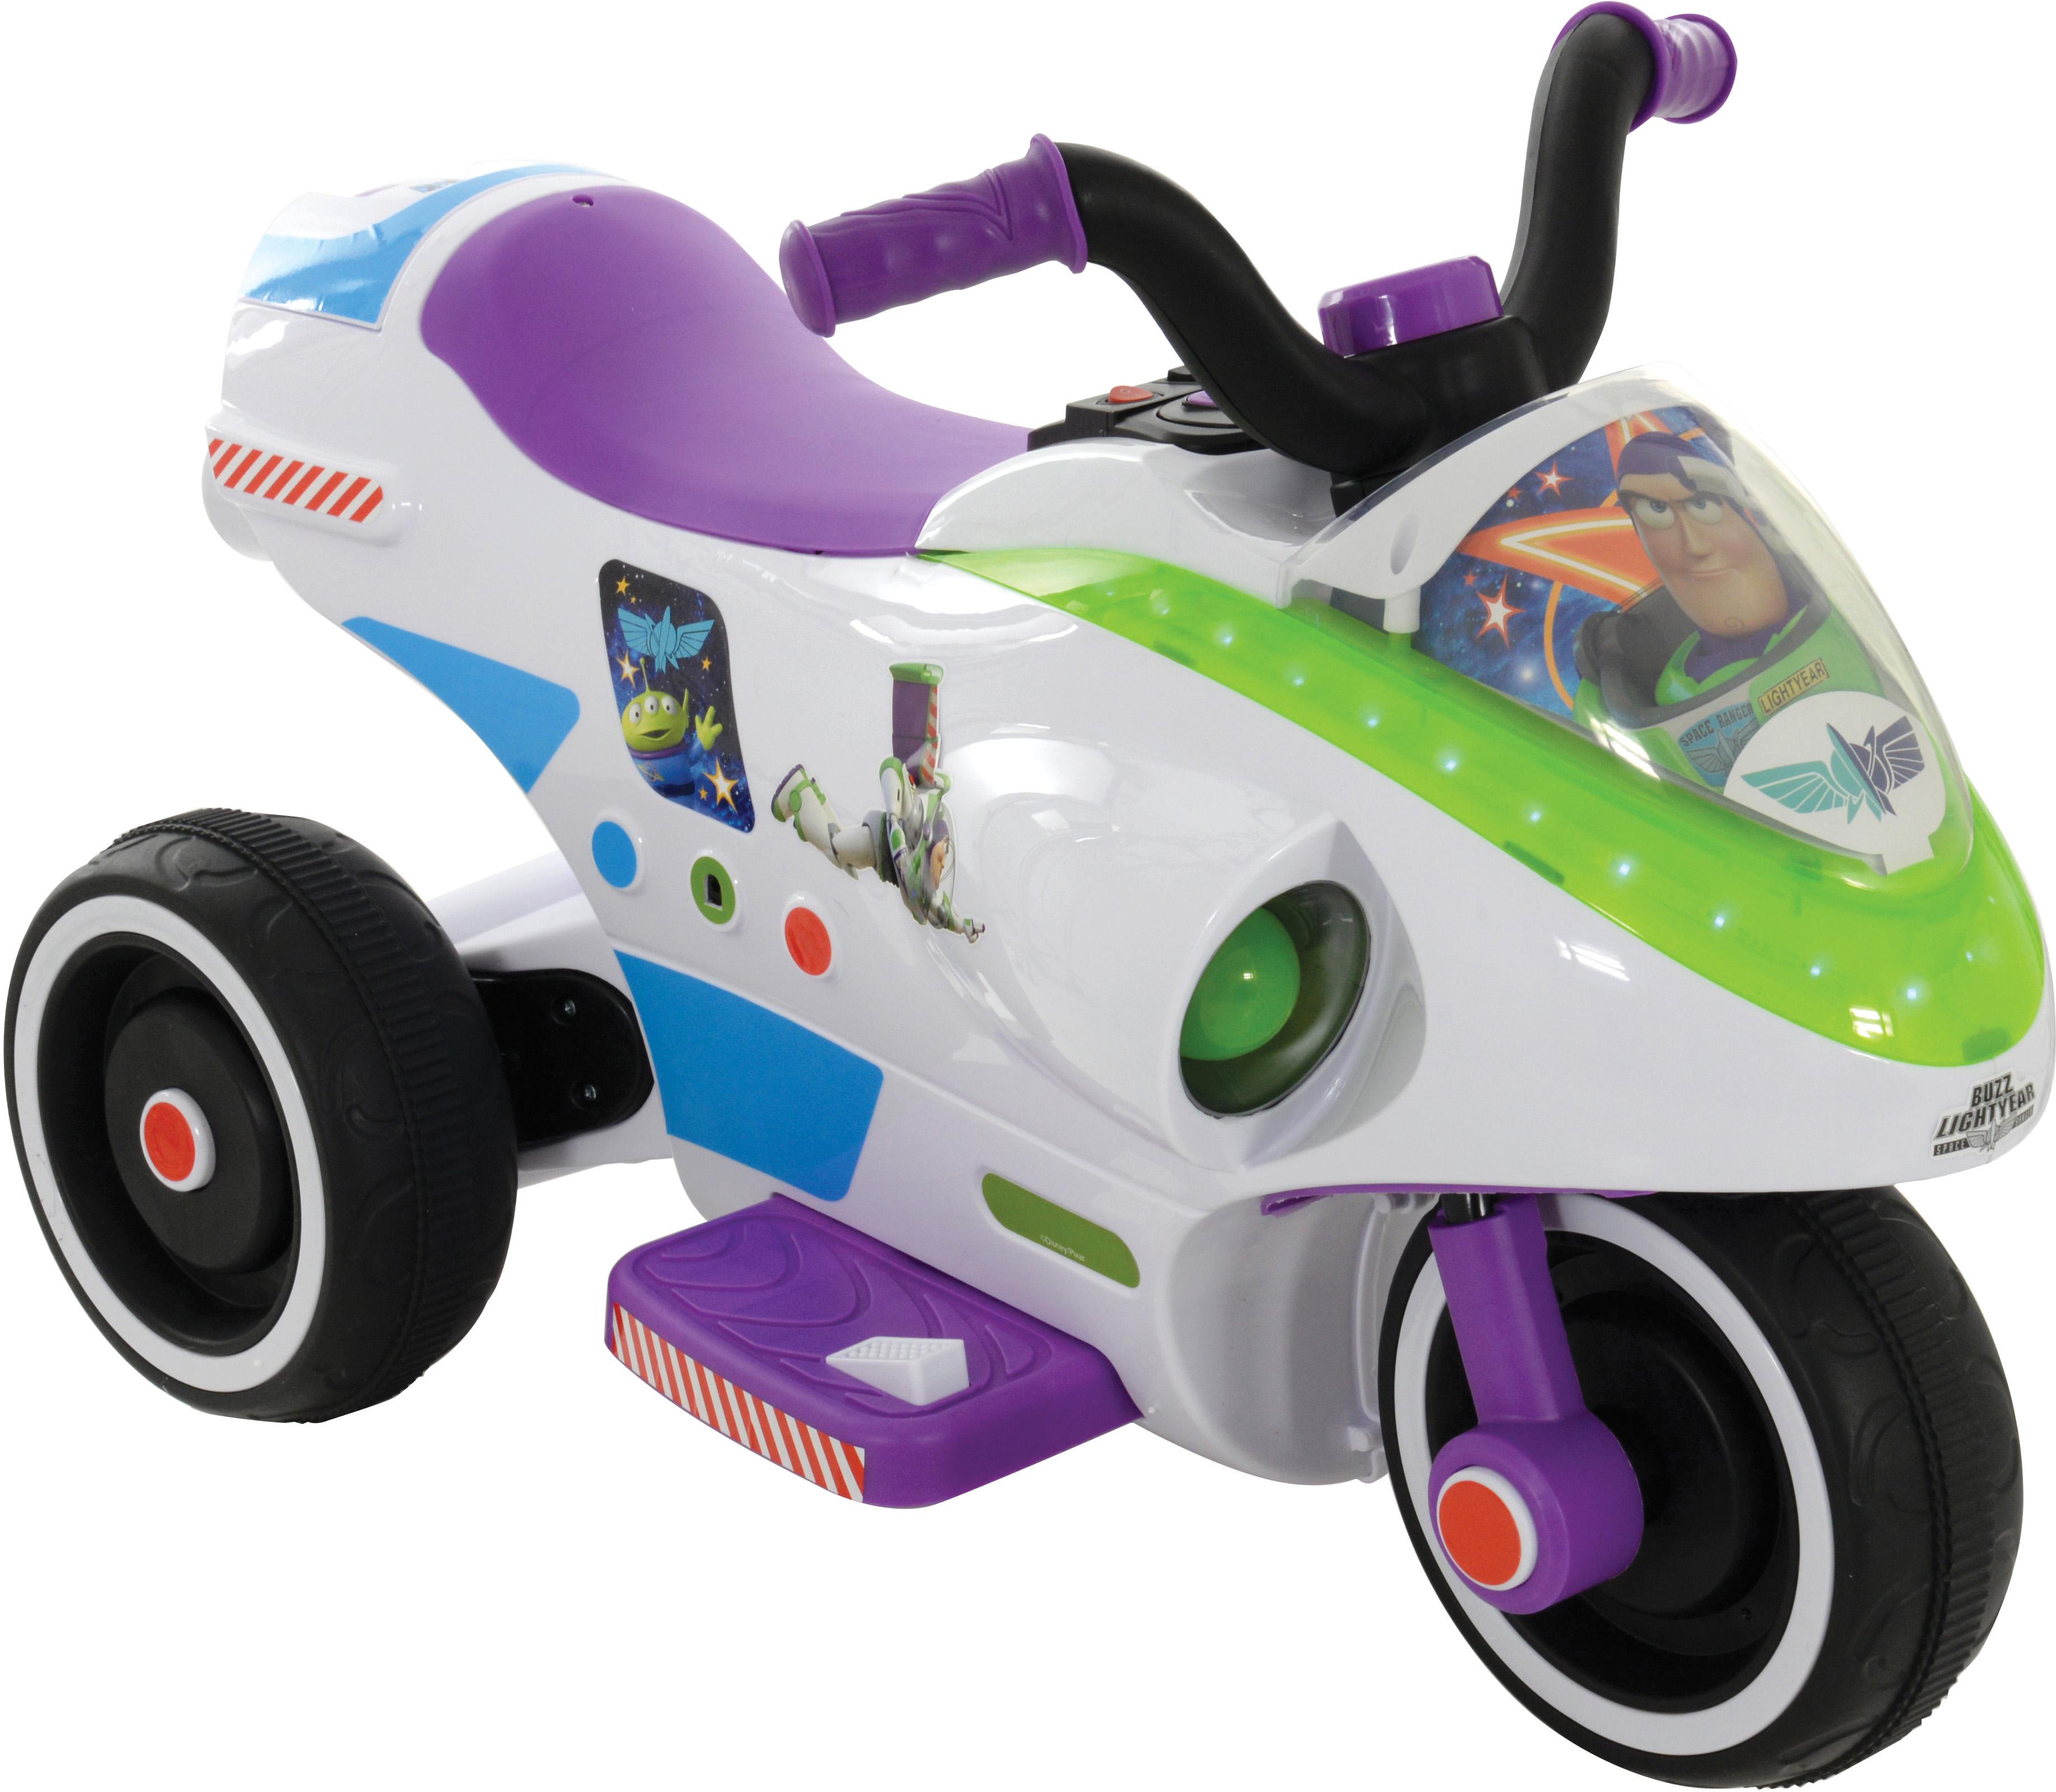 toy story motorized car